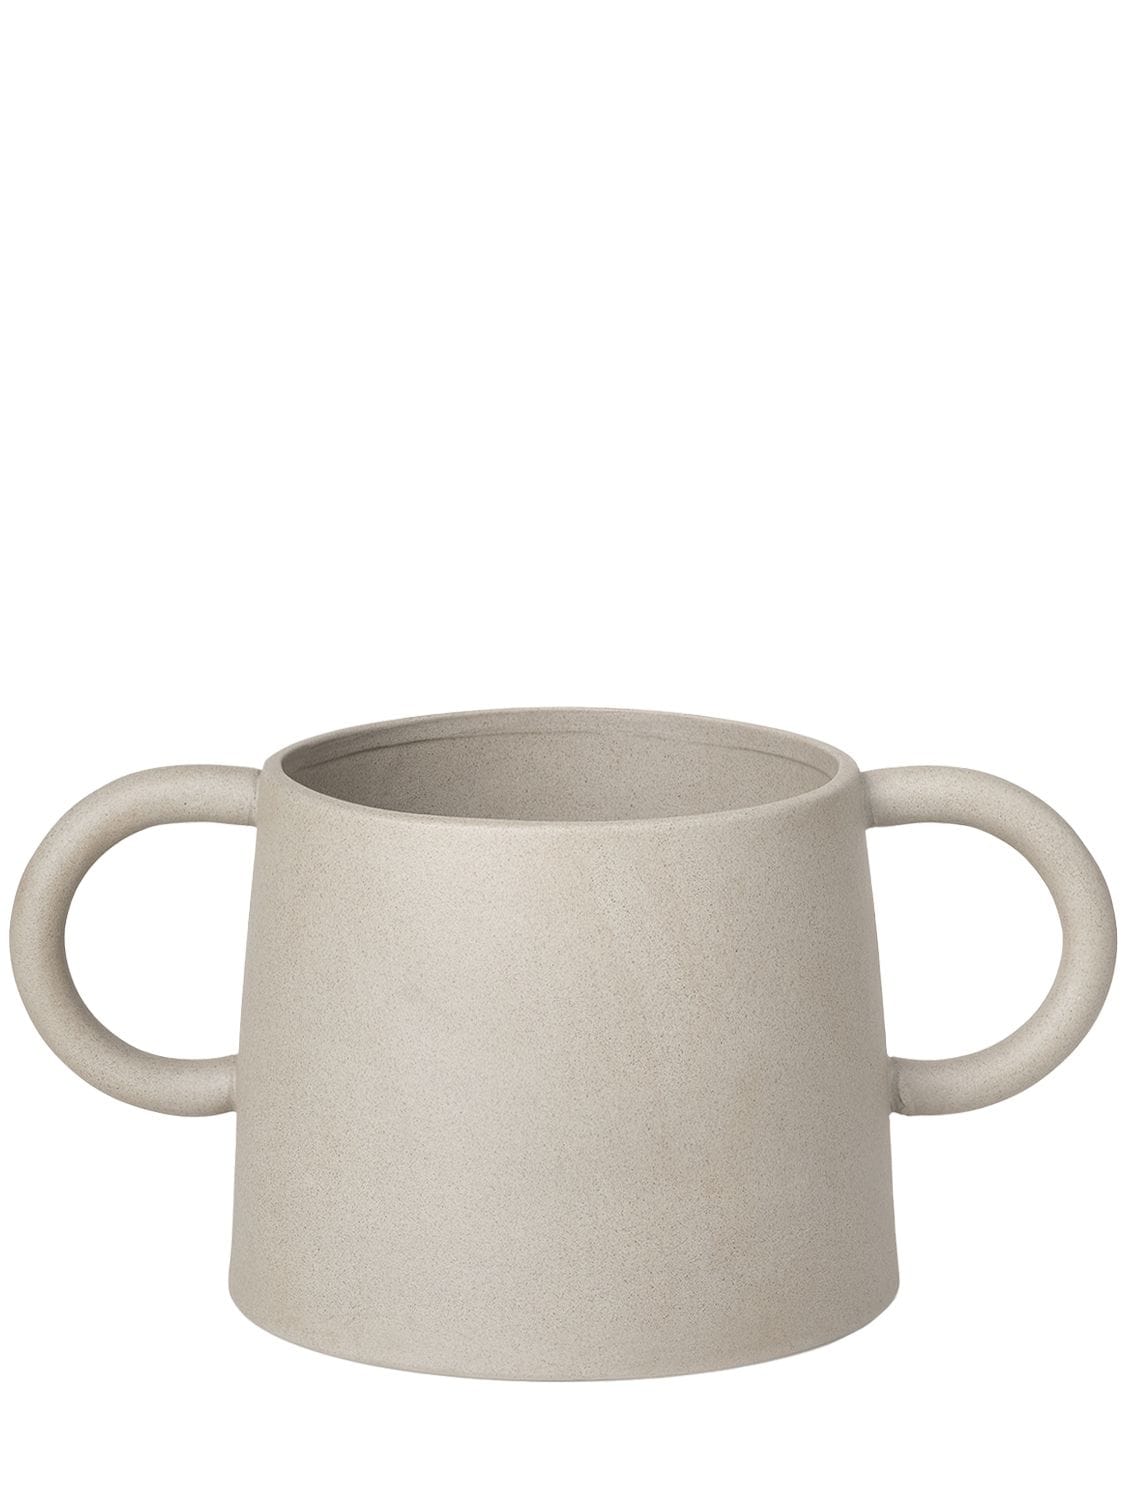 Ferm Living Anse Porcelain Pot In Beige,grey